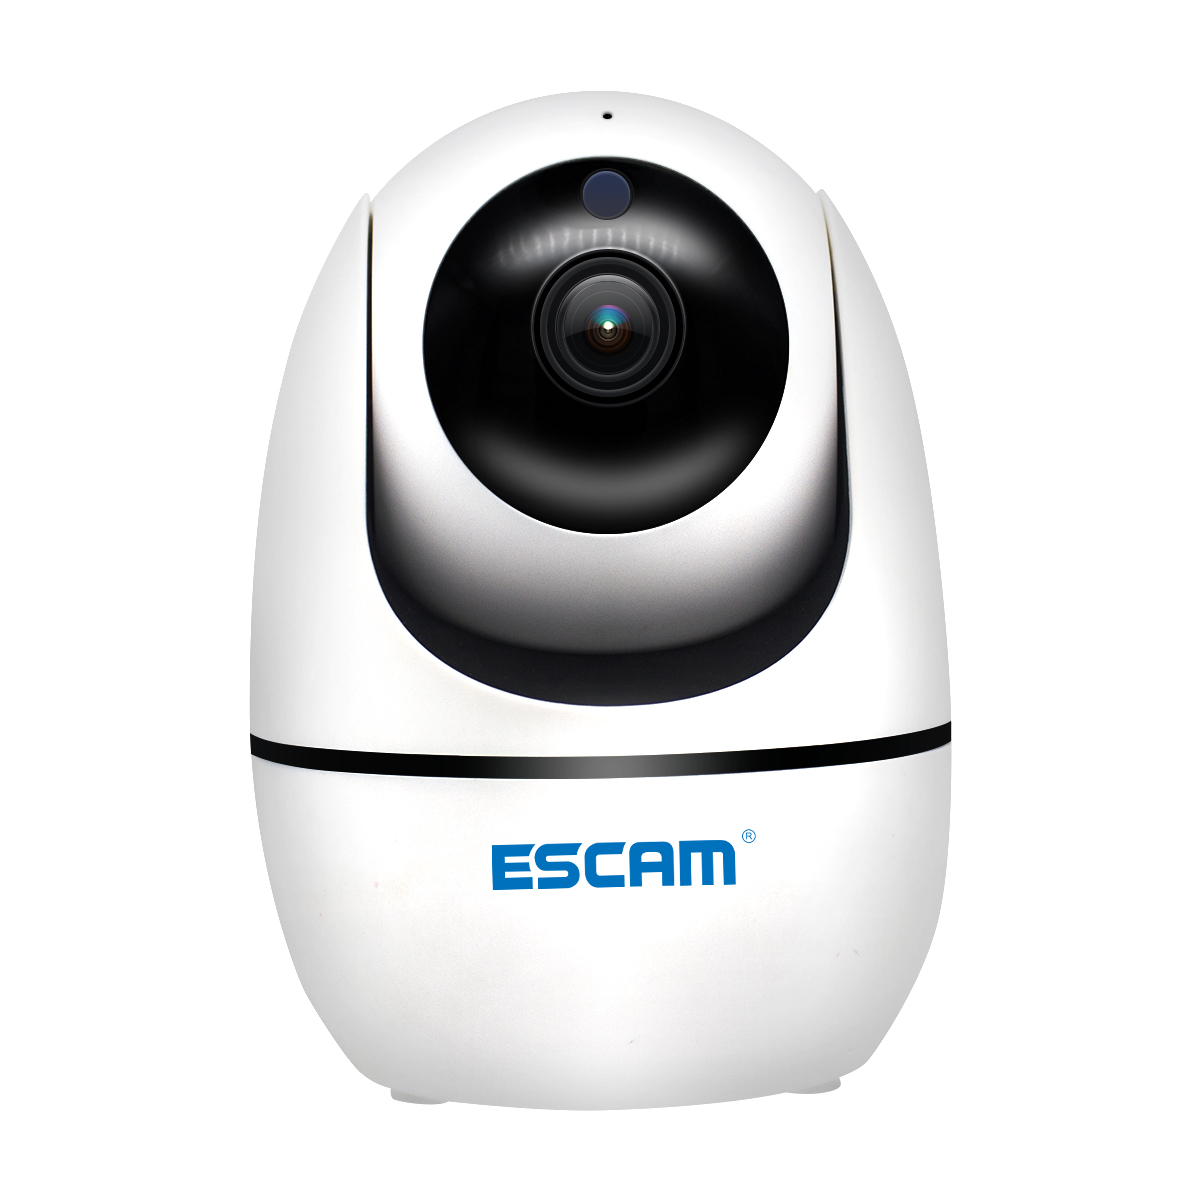 ESCAM PVR008 H.265 Auto Tracking PTZ Pan/Tile Camera 2MP HD 1080P Wireless Night Vision IP Camera